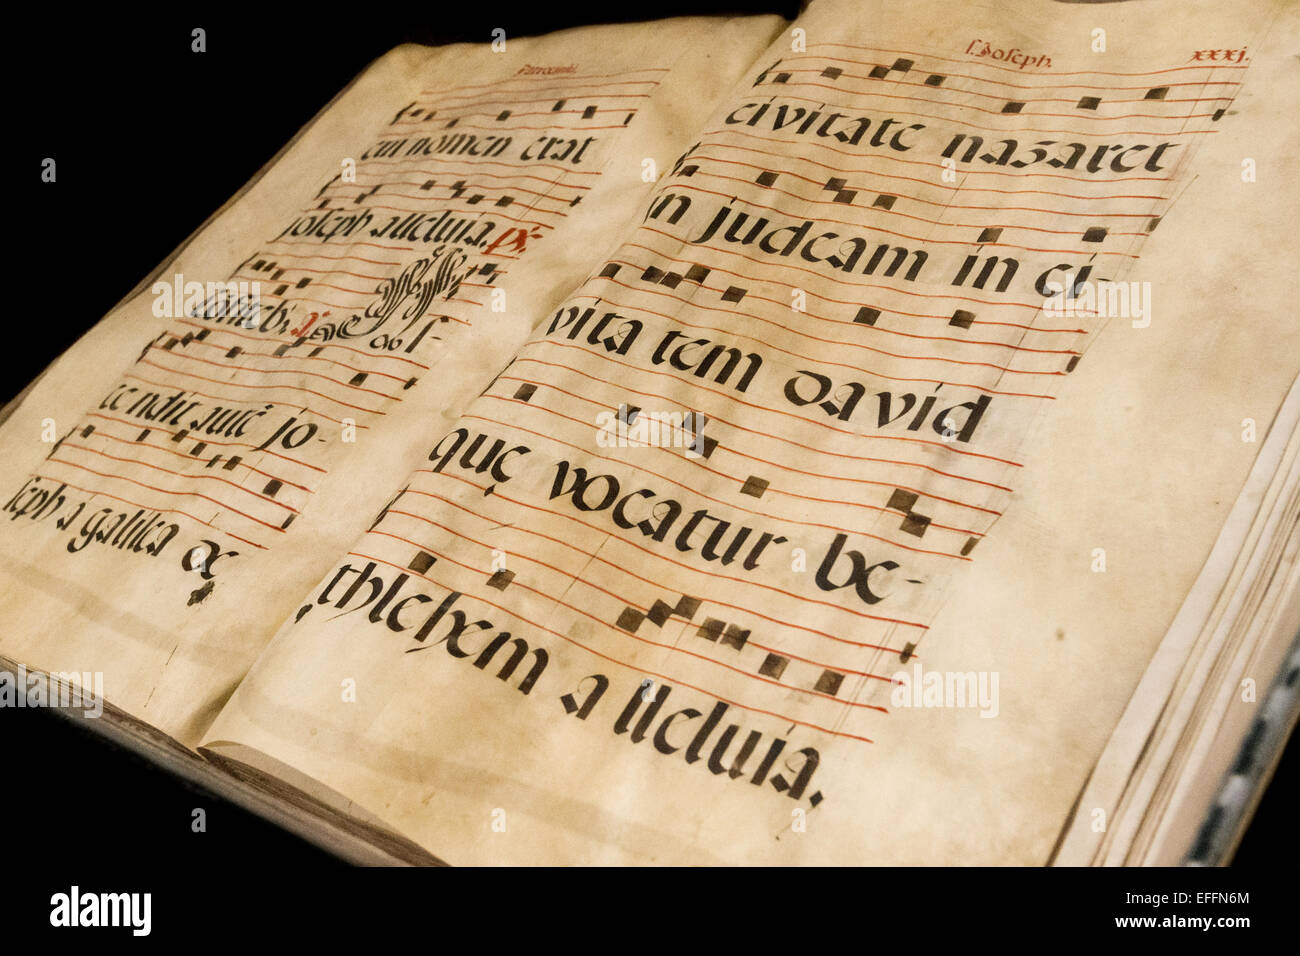 Medieval manuscript on display at Salamanca's Old Cathedral Stock Photo